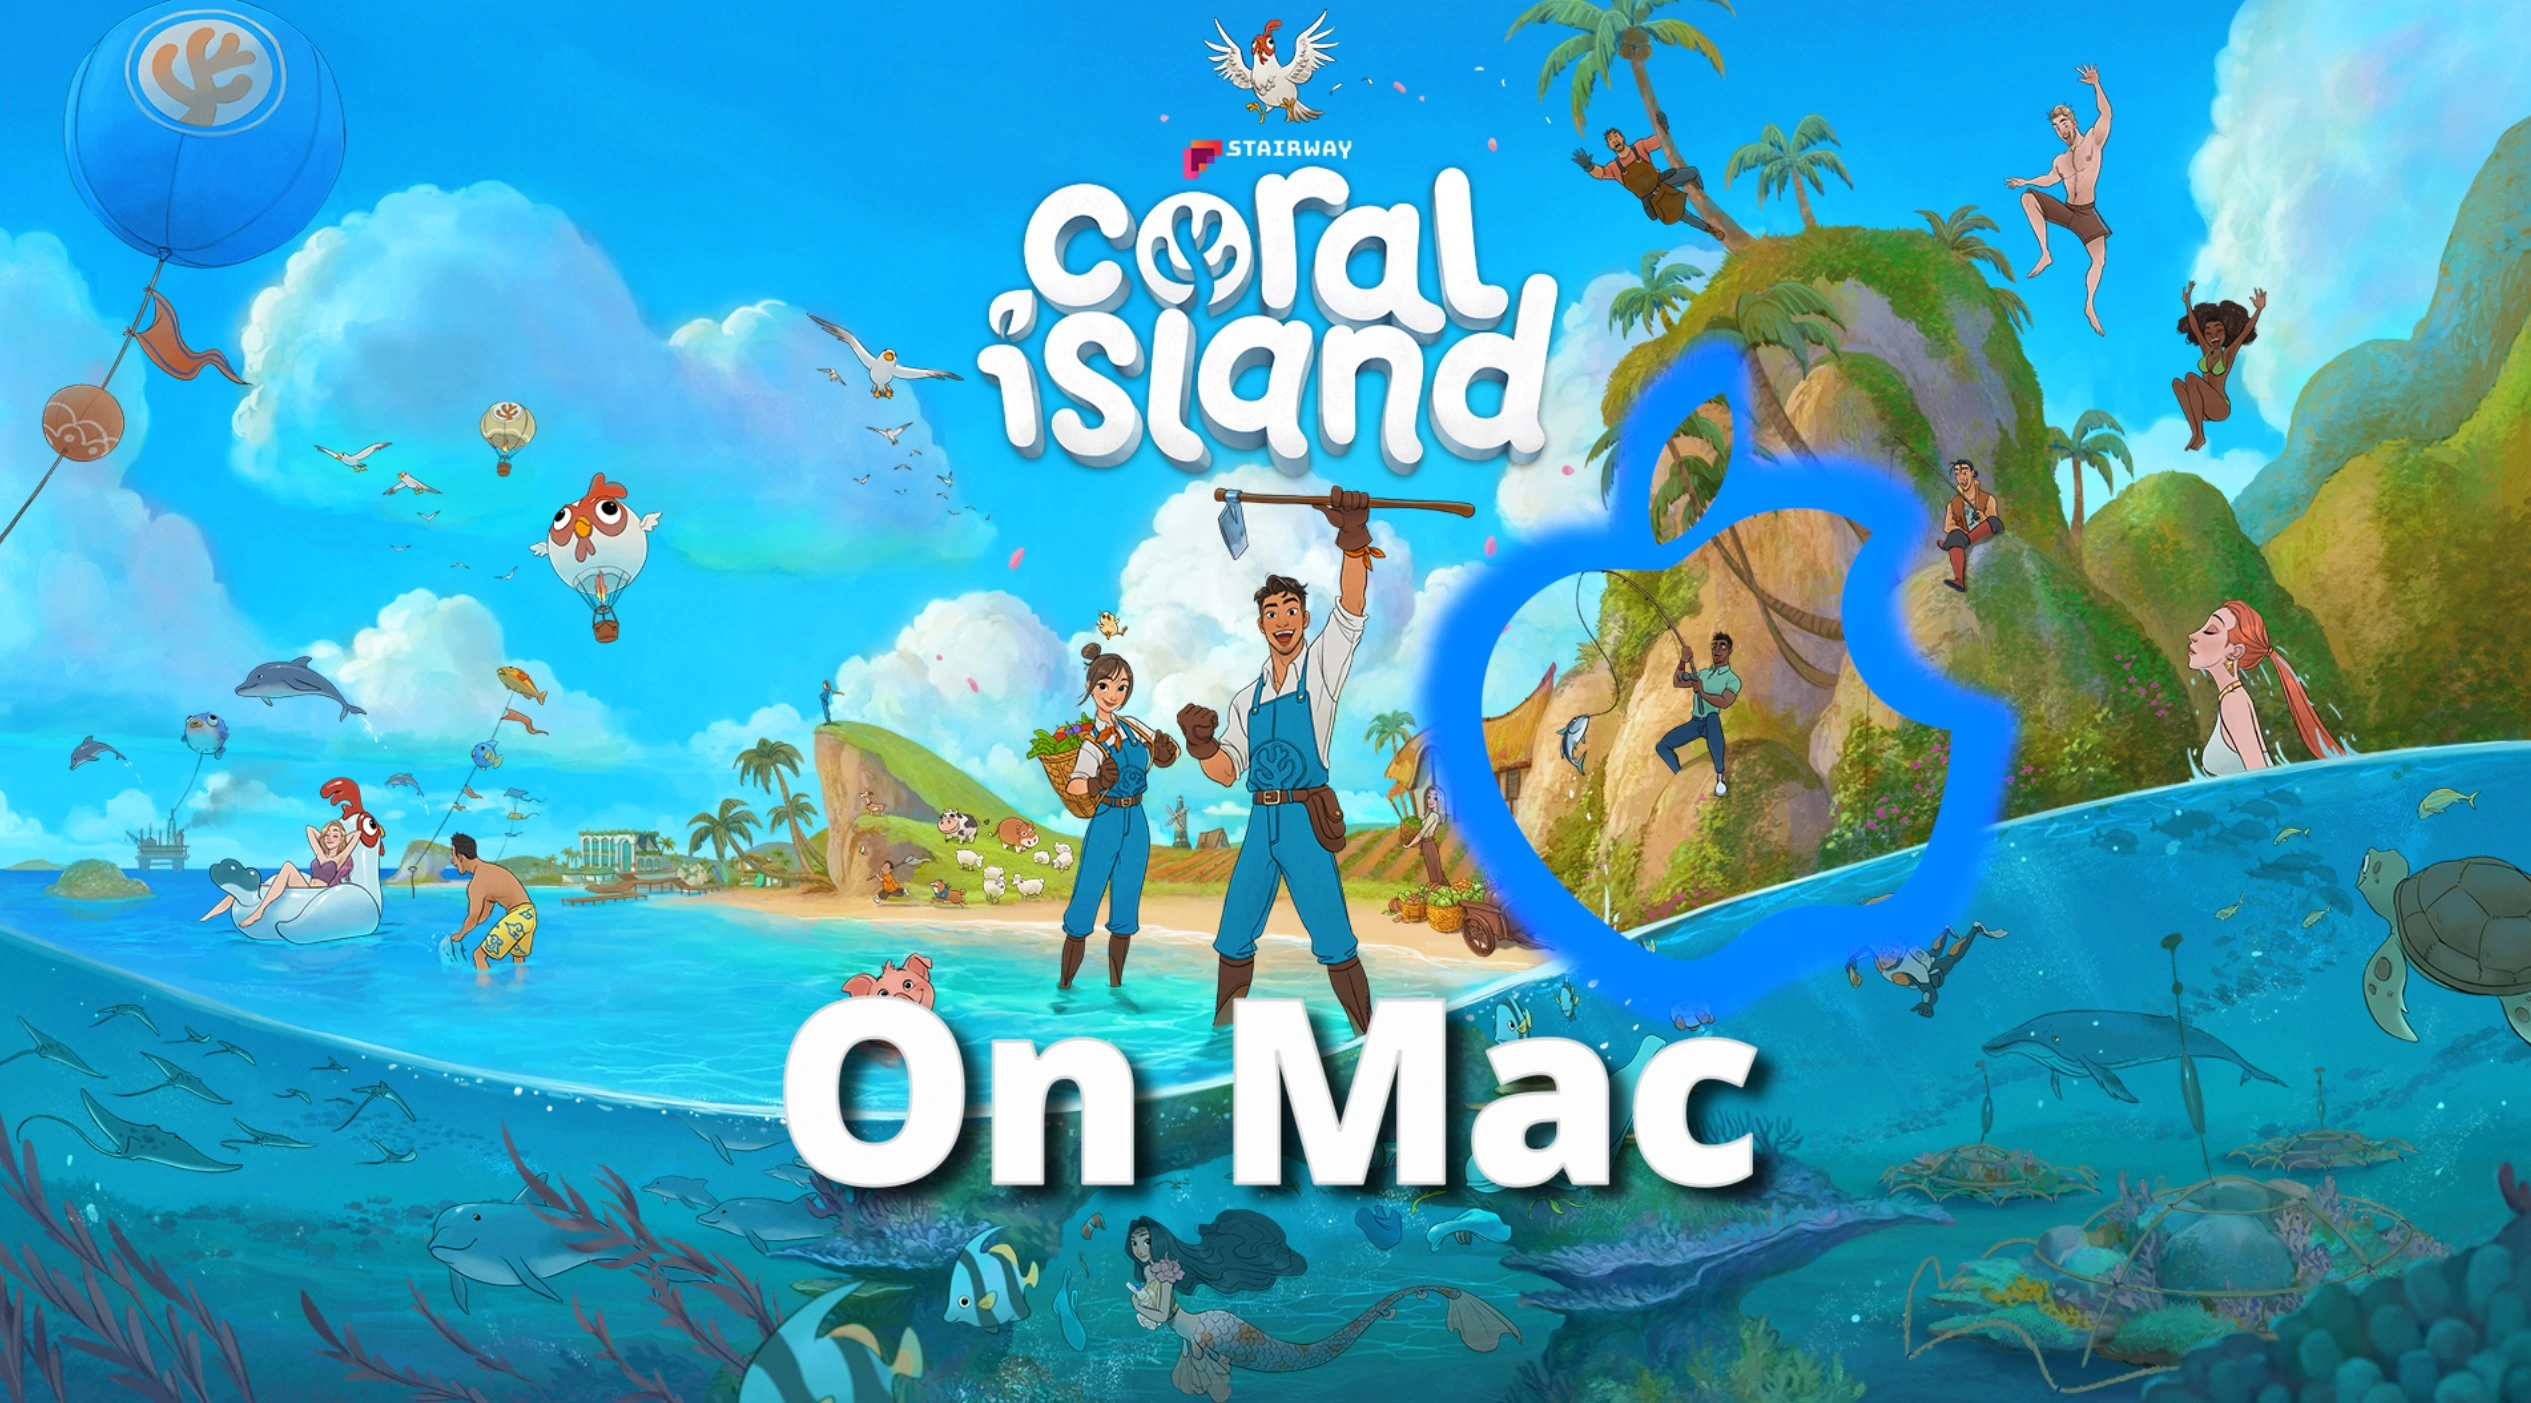 Play Coral Island on Mac